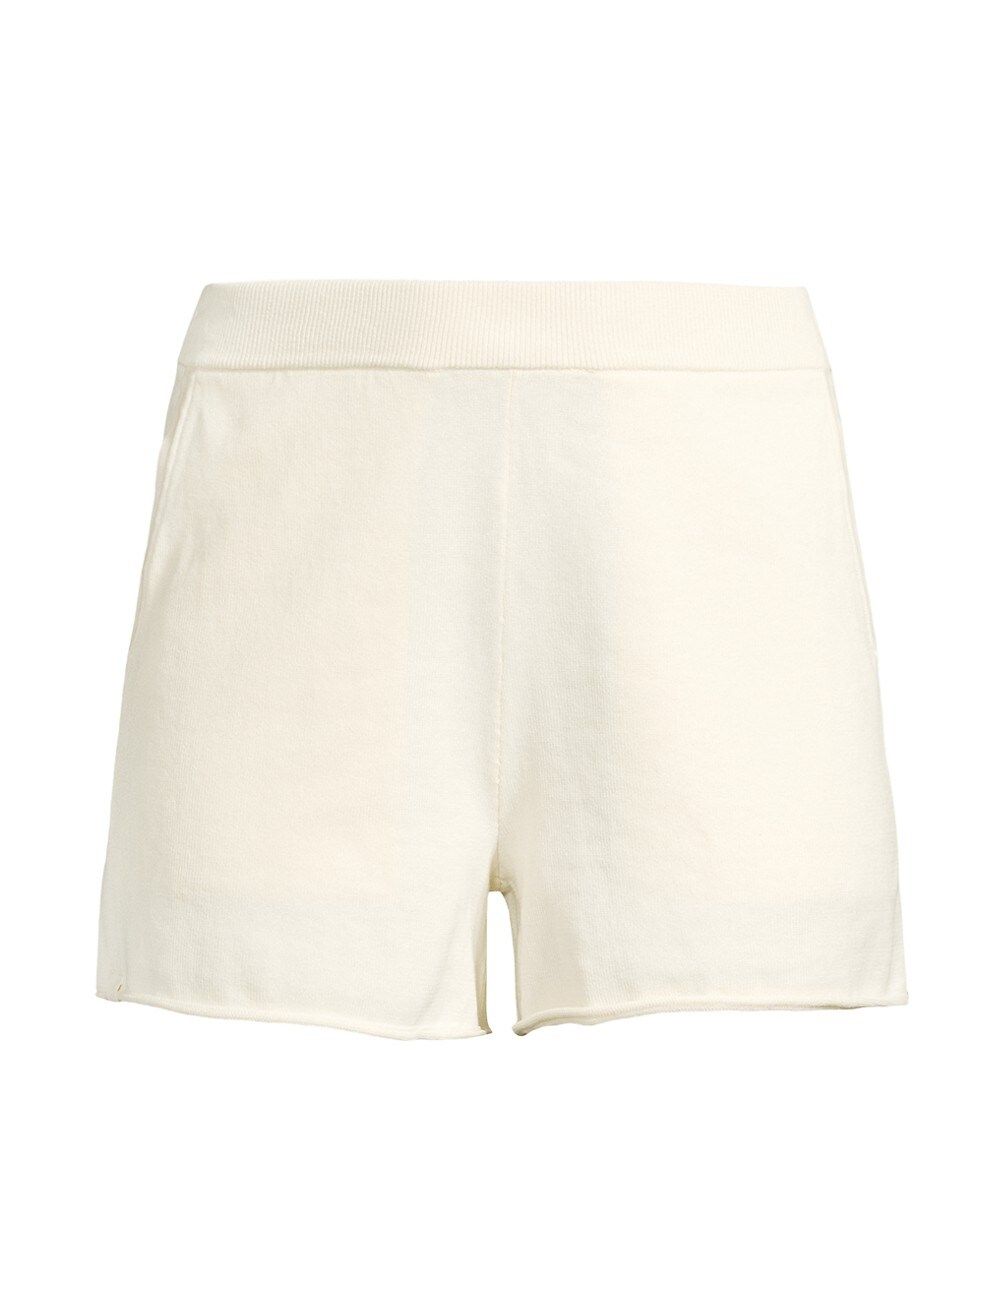 Barefoot Dreams Essentials Sunbleached Cotton Lounge Shorts | Saks Fifth Avenue